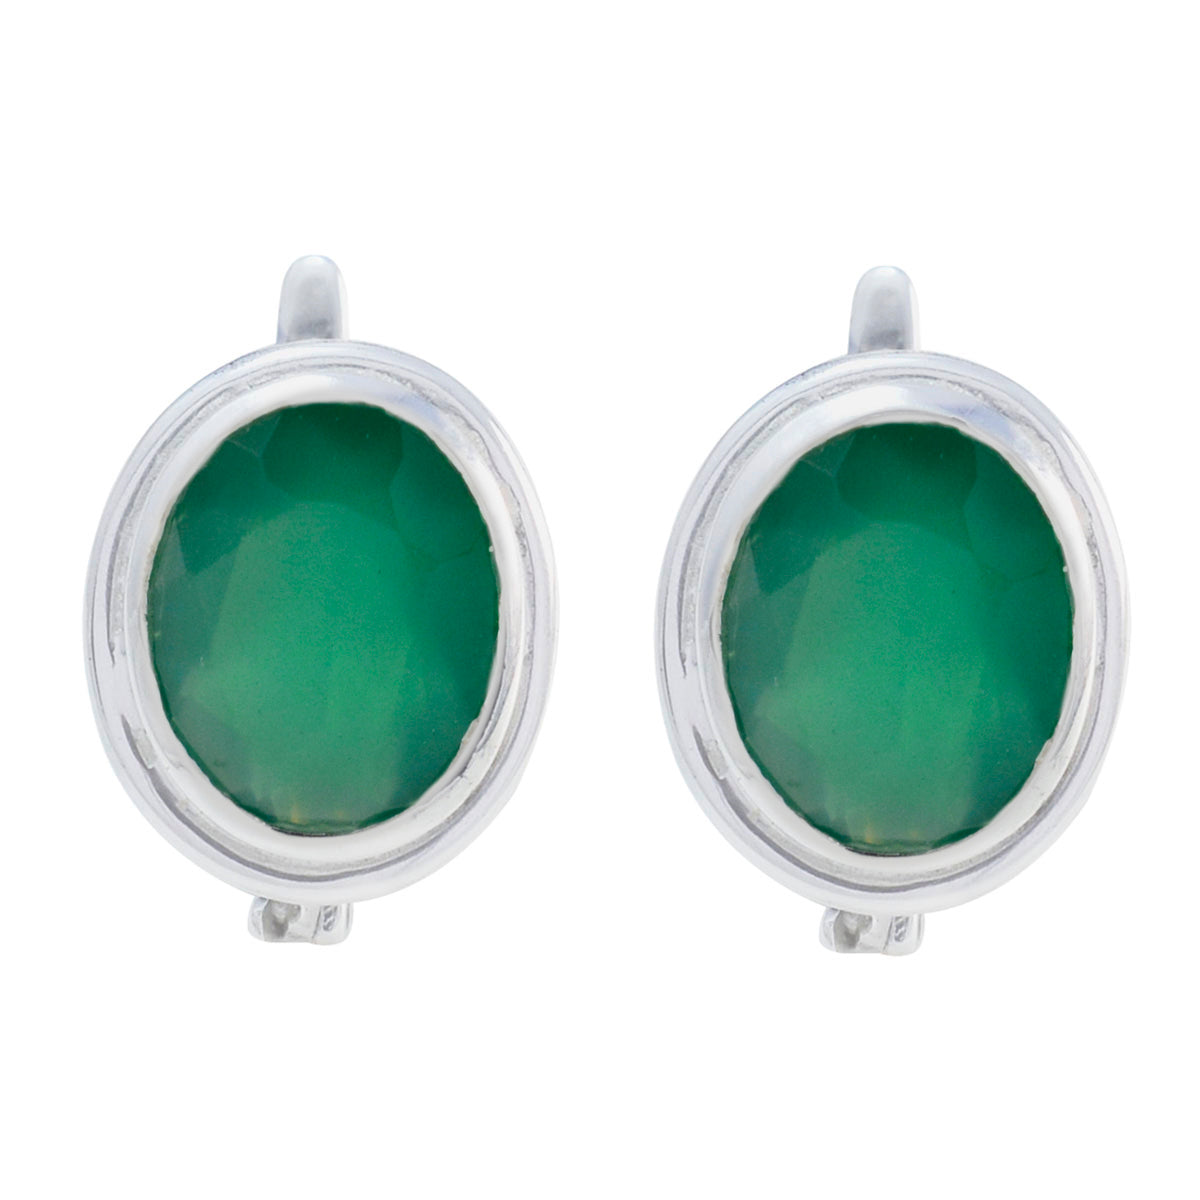 Riyo Eleganter Sterlingsilber-Ohrring für Damen, indischer Smaragd-Ohrring, Lünettenfassung, grüner Ohrring, Ohrstecker